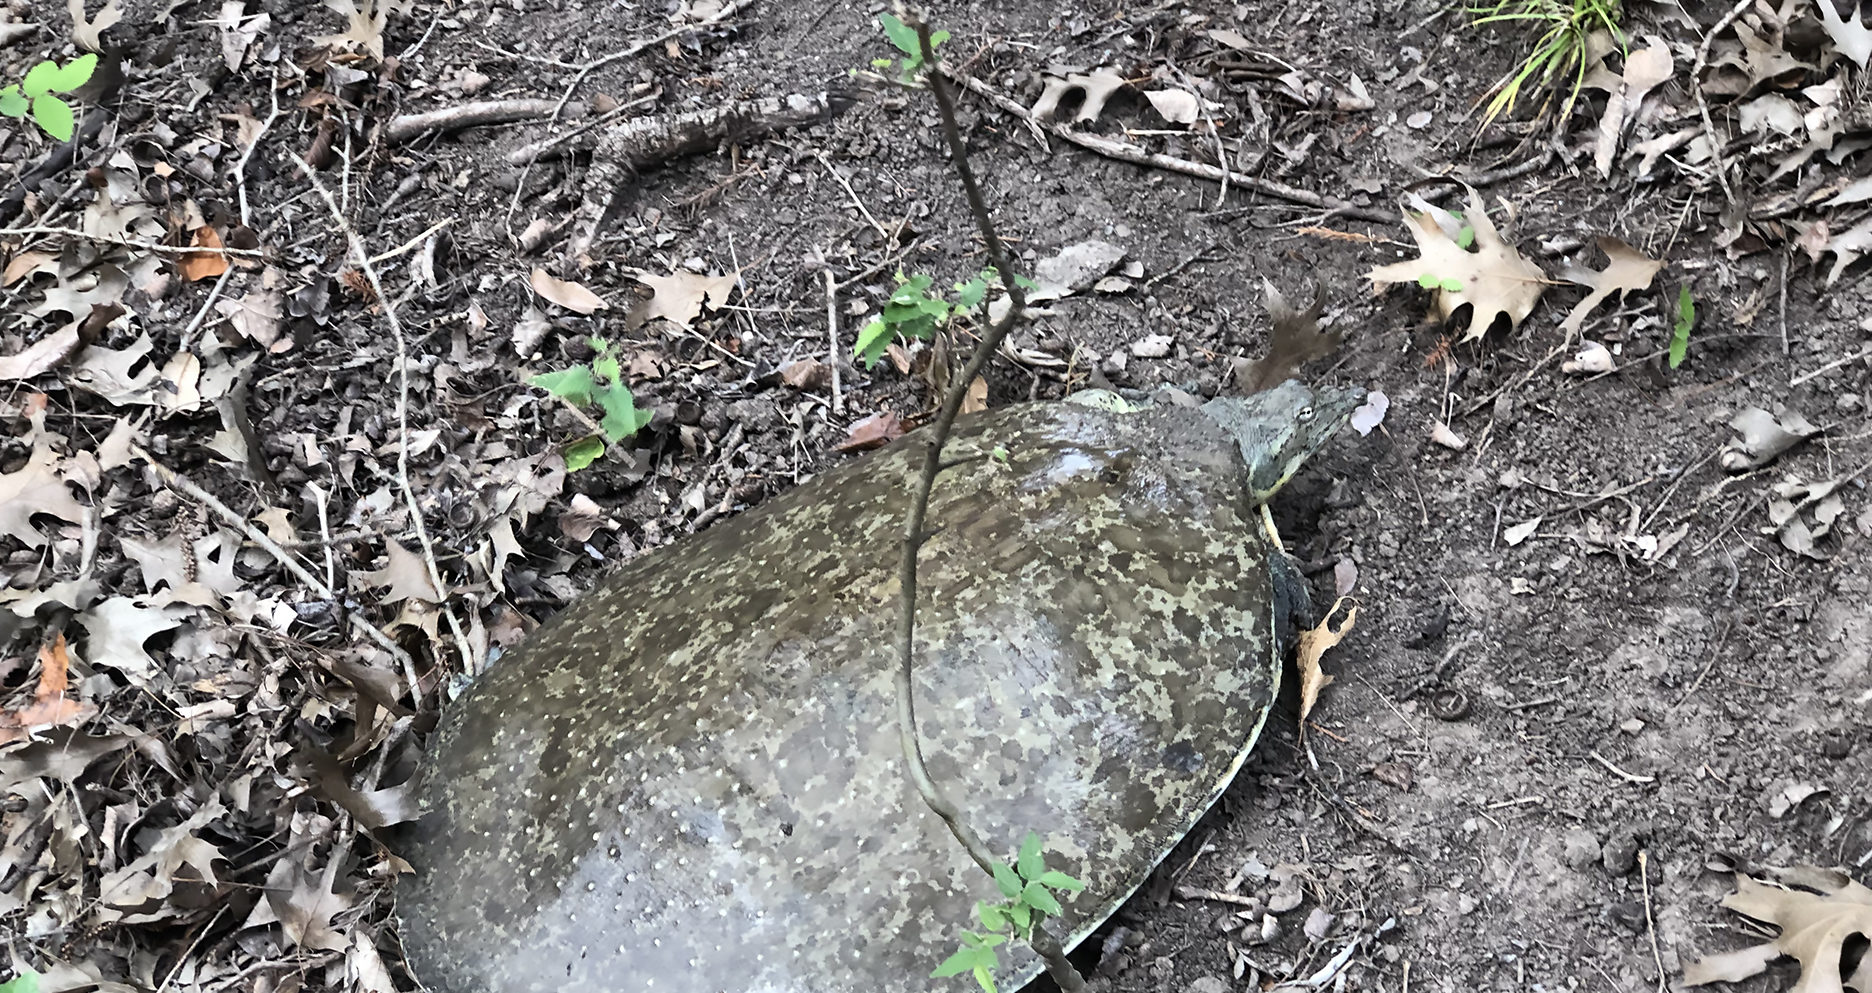 Soft-Shelled Turtle